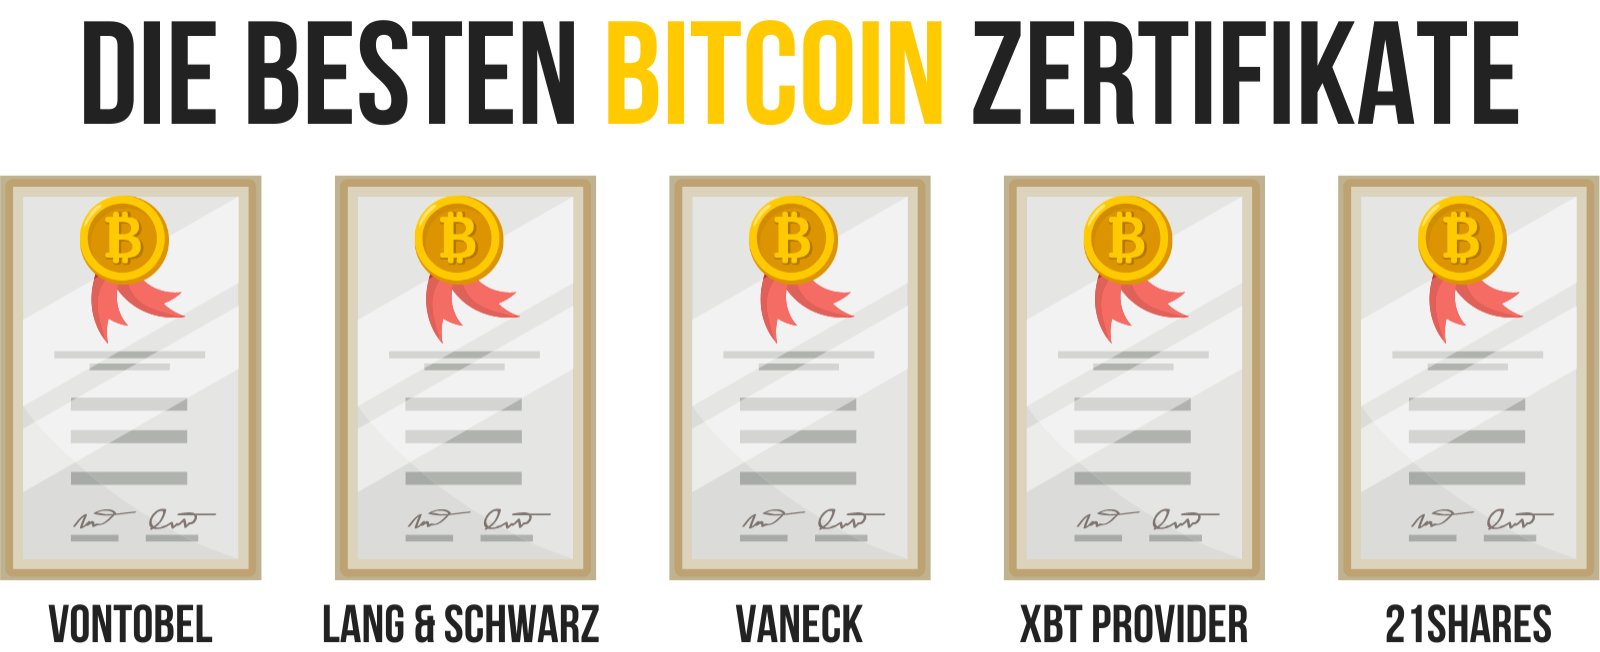 Die besten Bitcoin Zertifikate